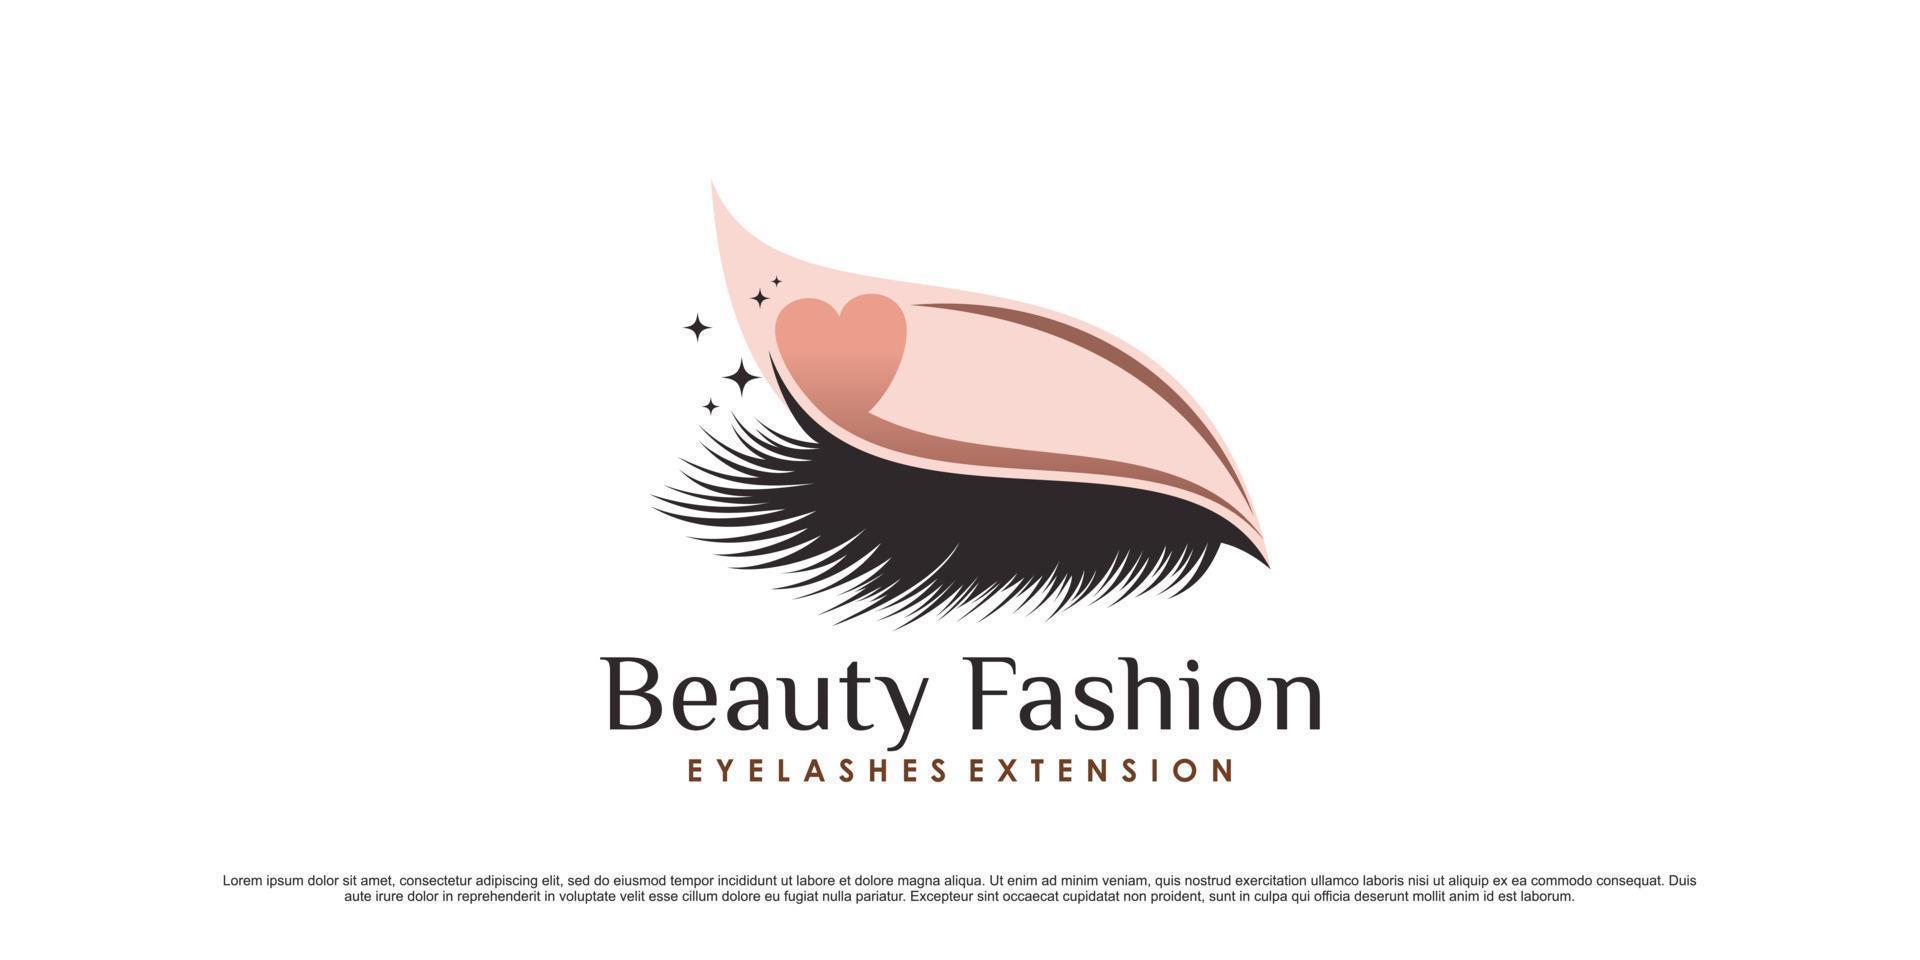 plantilla de diseño de logotipo de pestañas de belleza con elemento de hoja y concepto moderno creativo vector